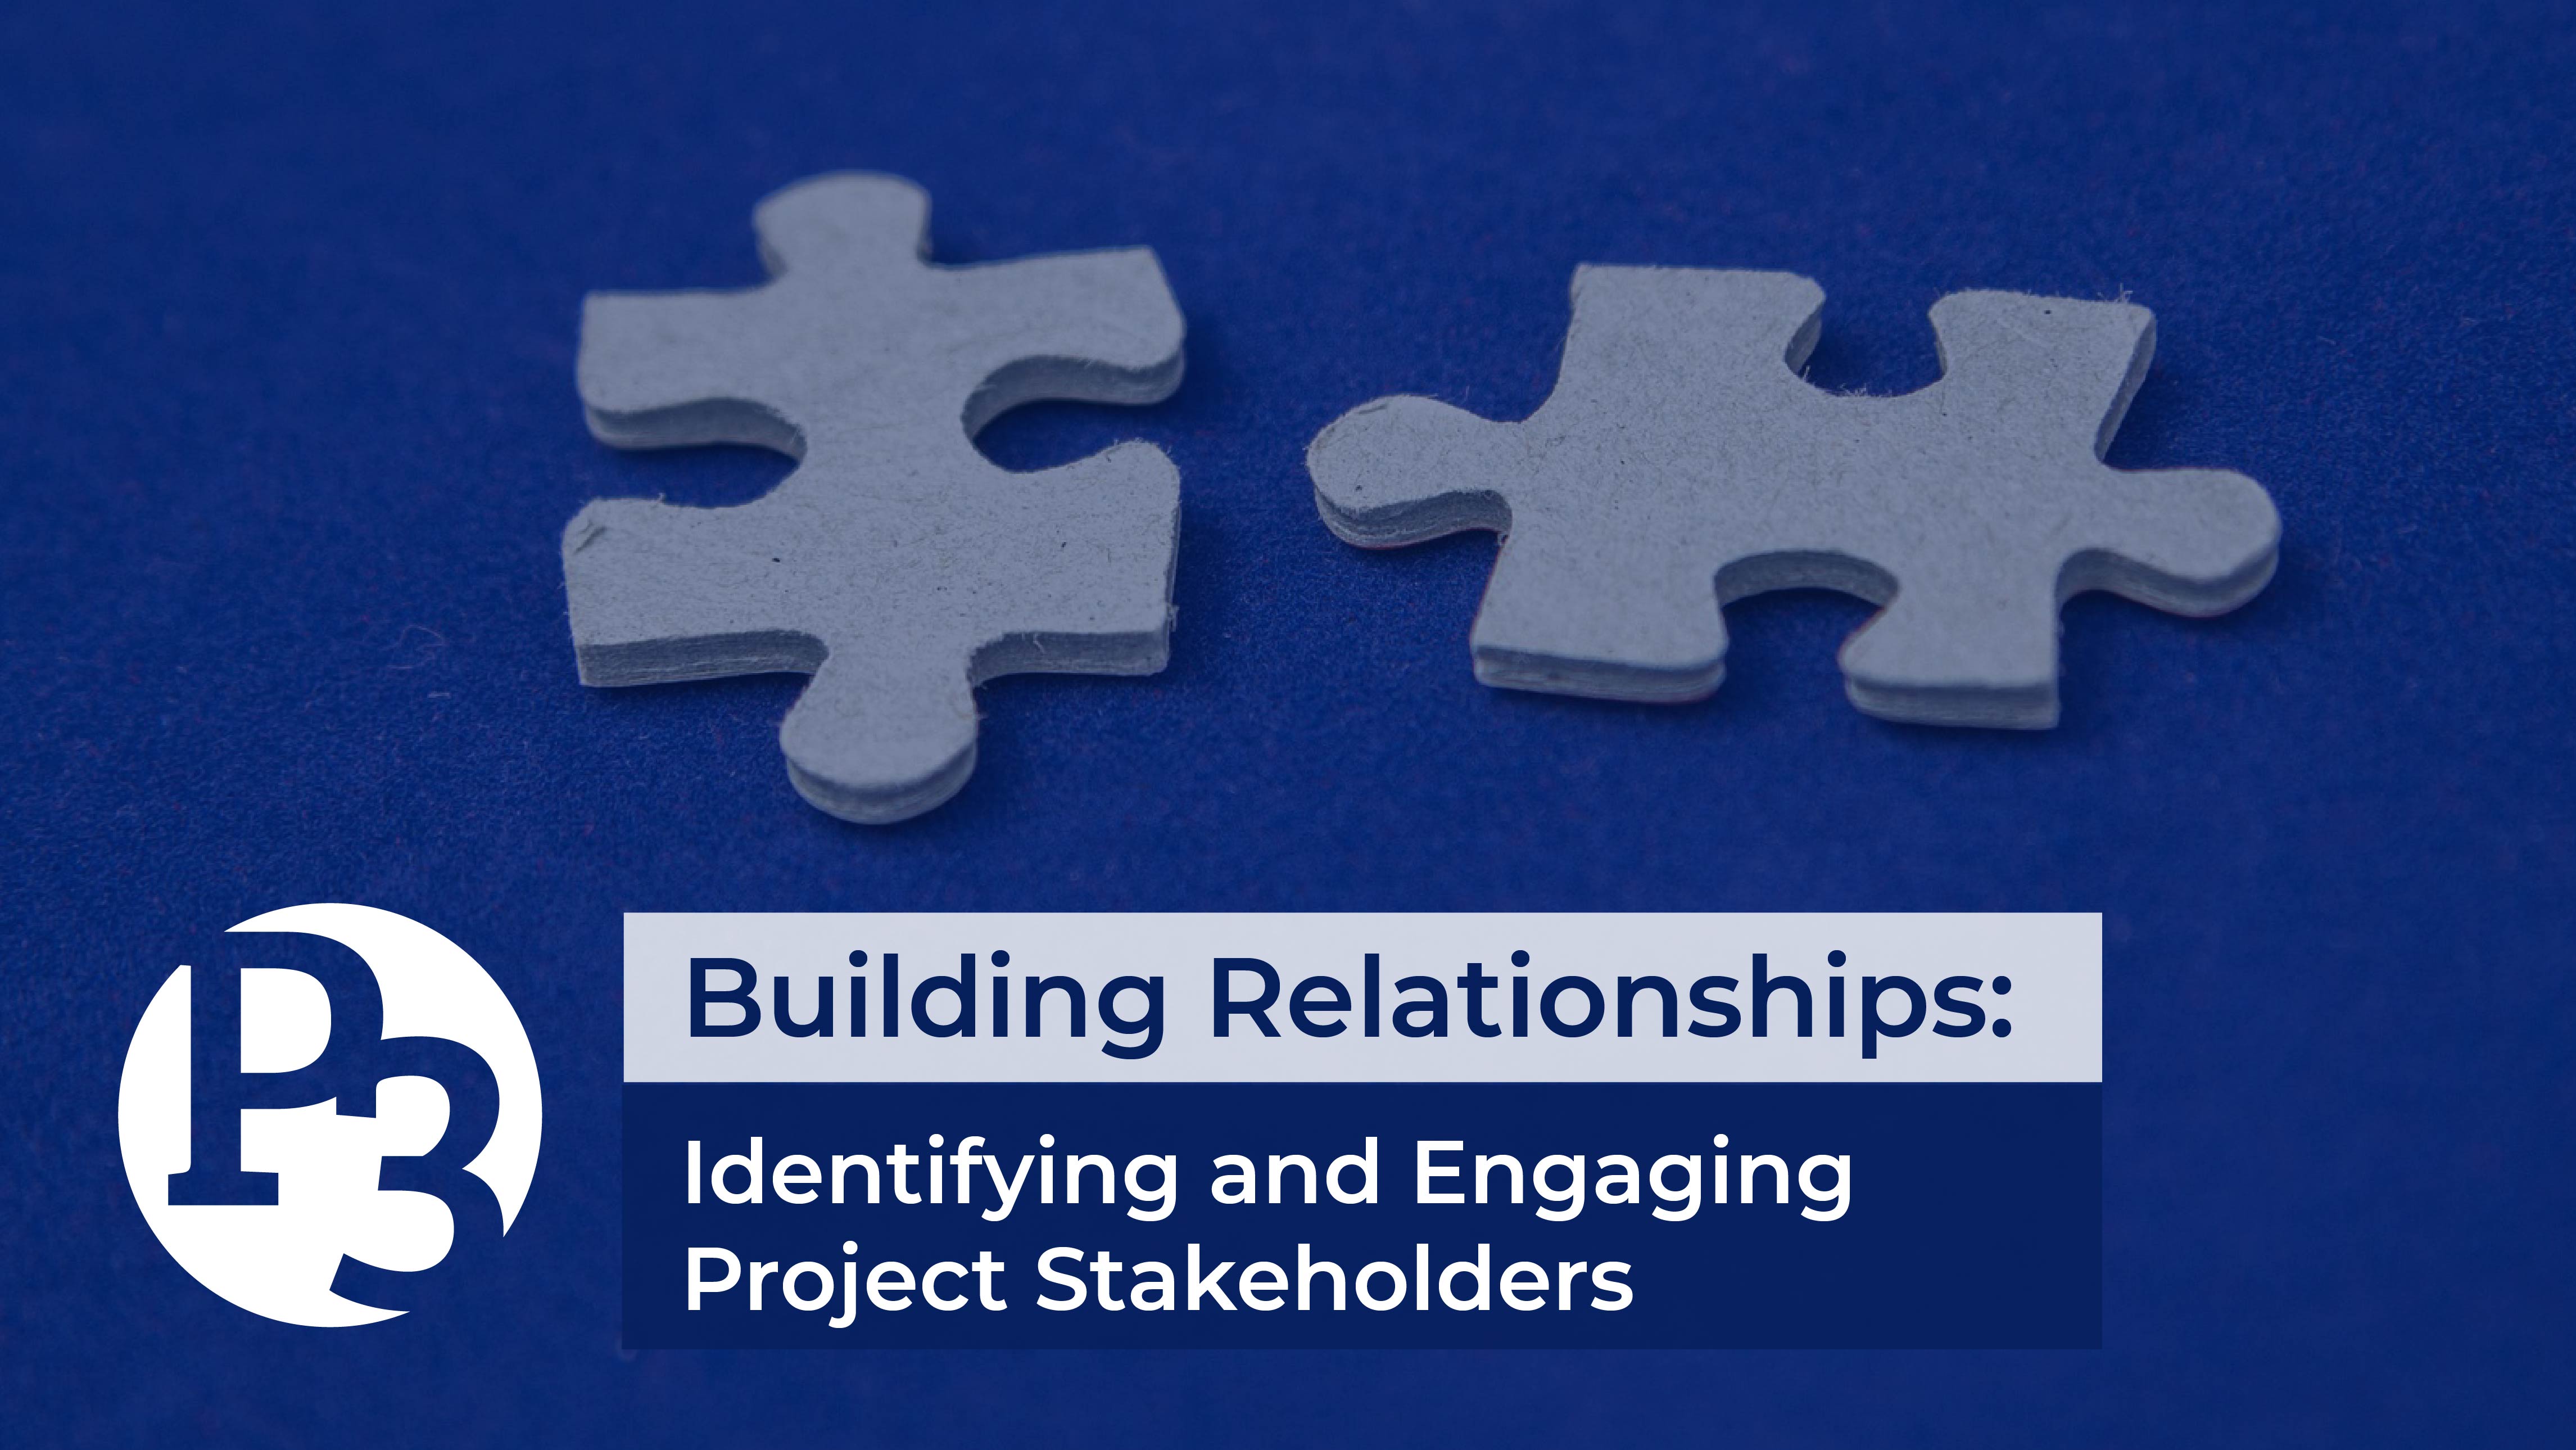 Building relationships